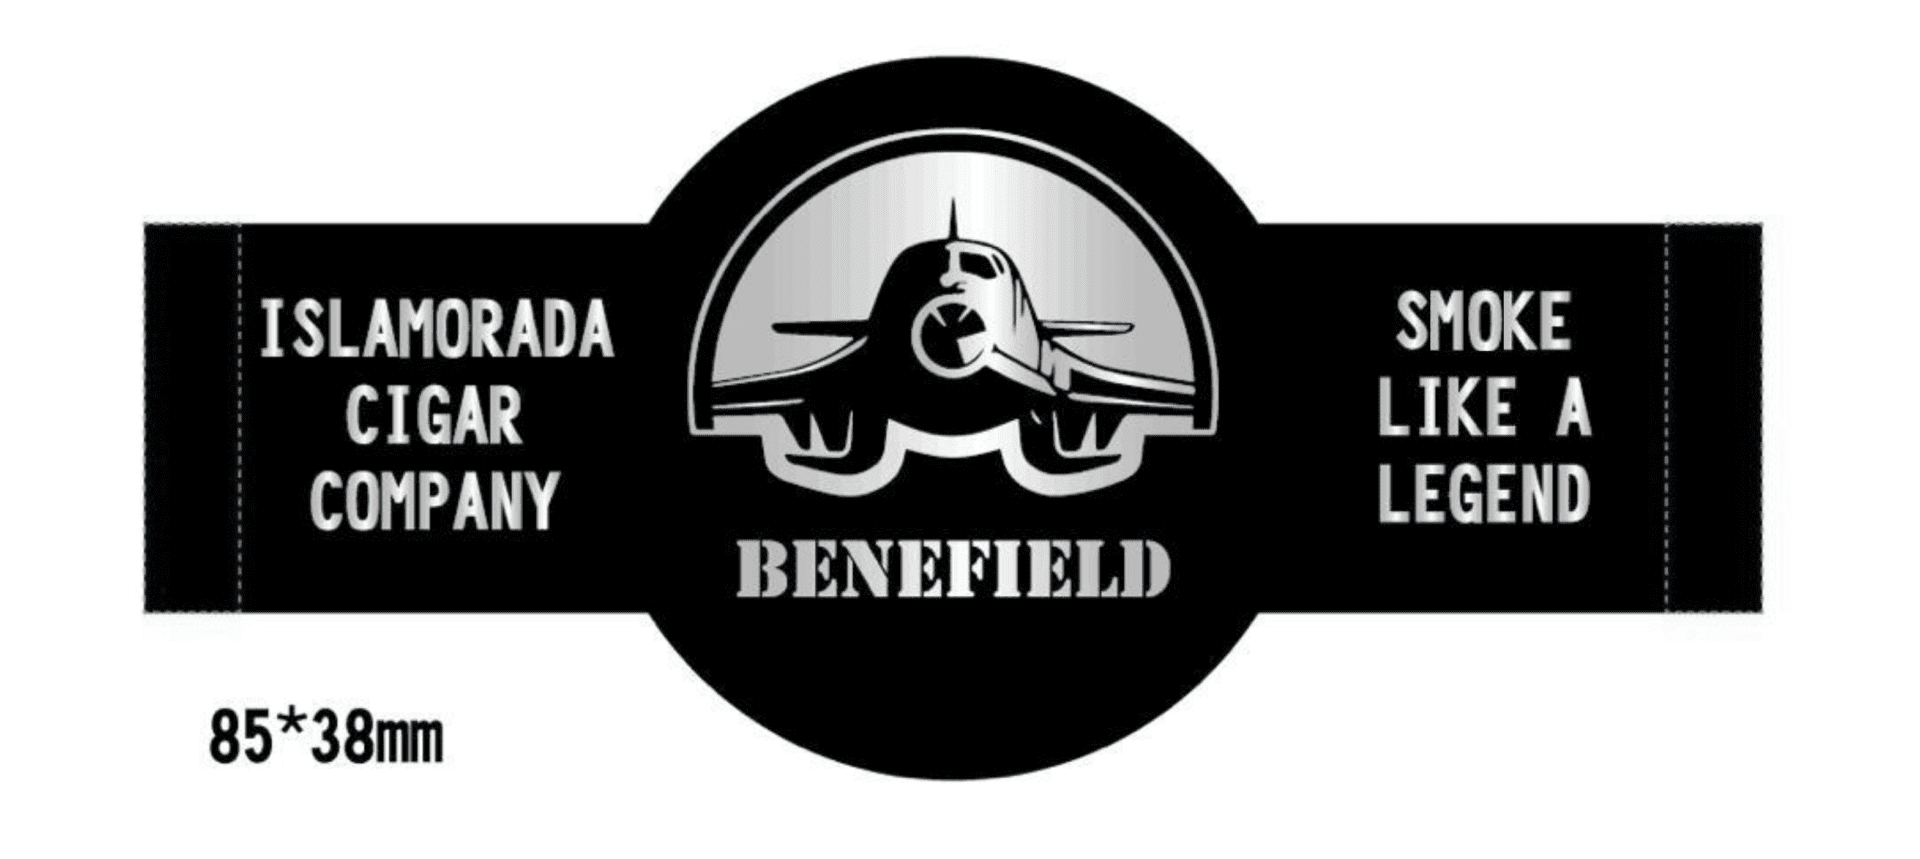 Benefield -Islamorada revised